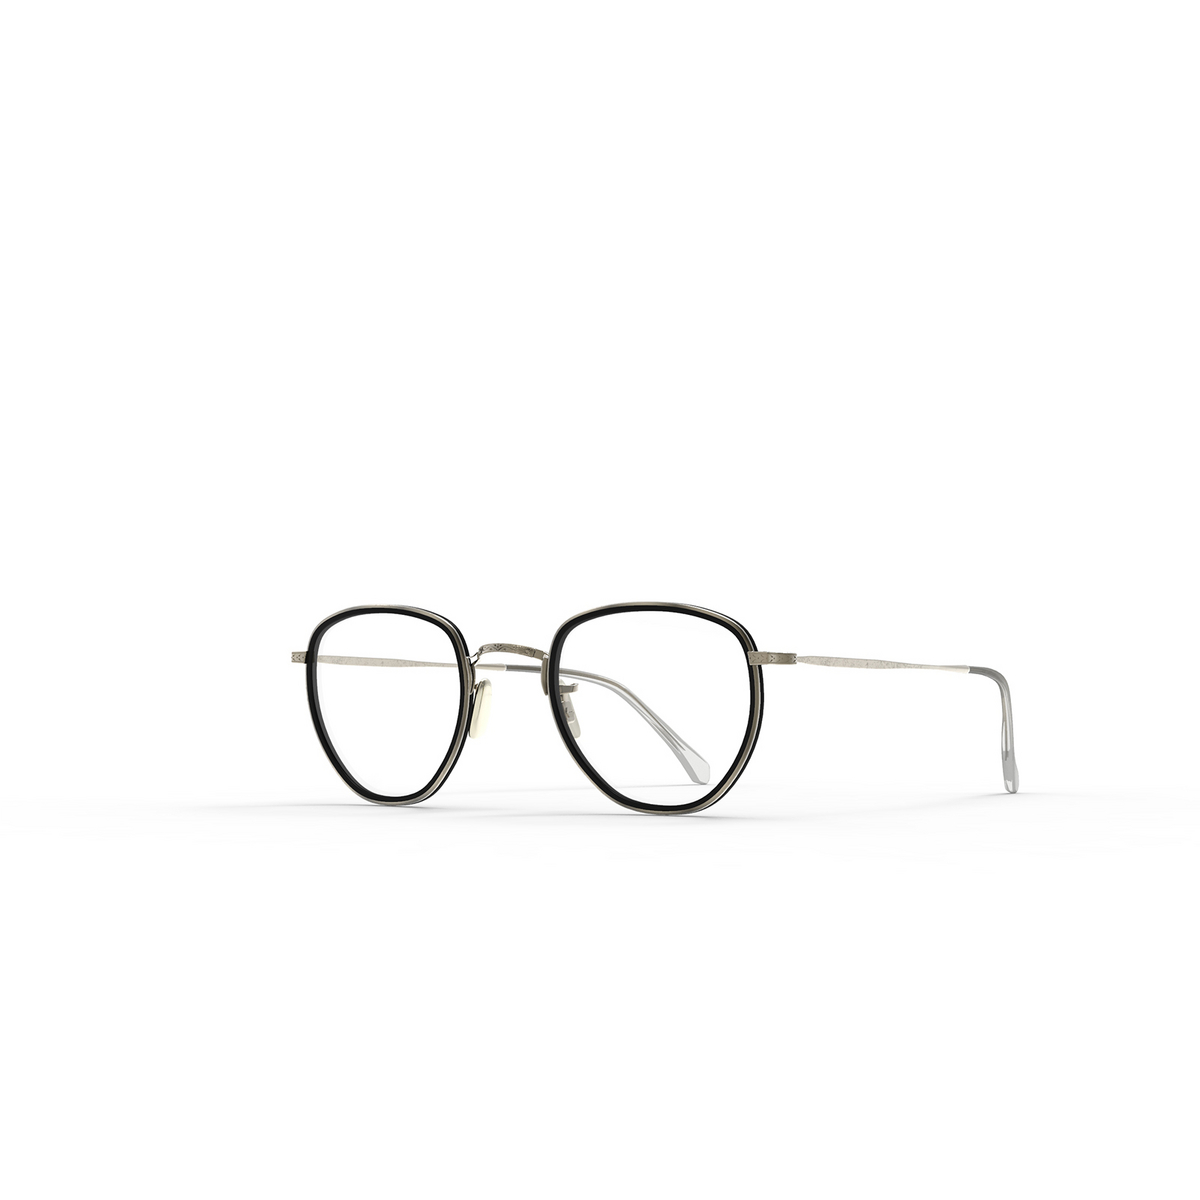 Mr. Leight® Square Eyeglasses: Roku C color Matte Black-antique Gold Mbk-atg - three-quarters view.